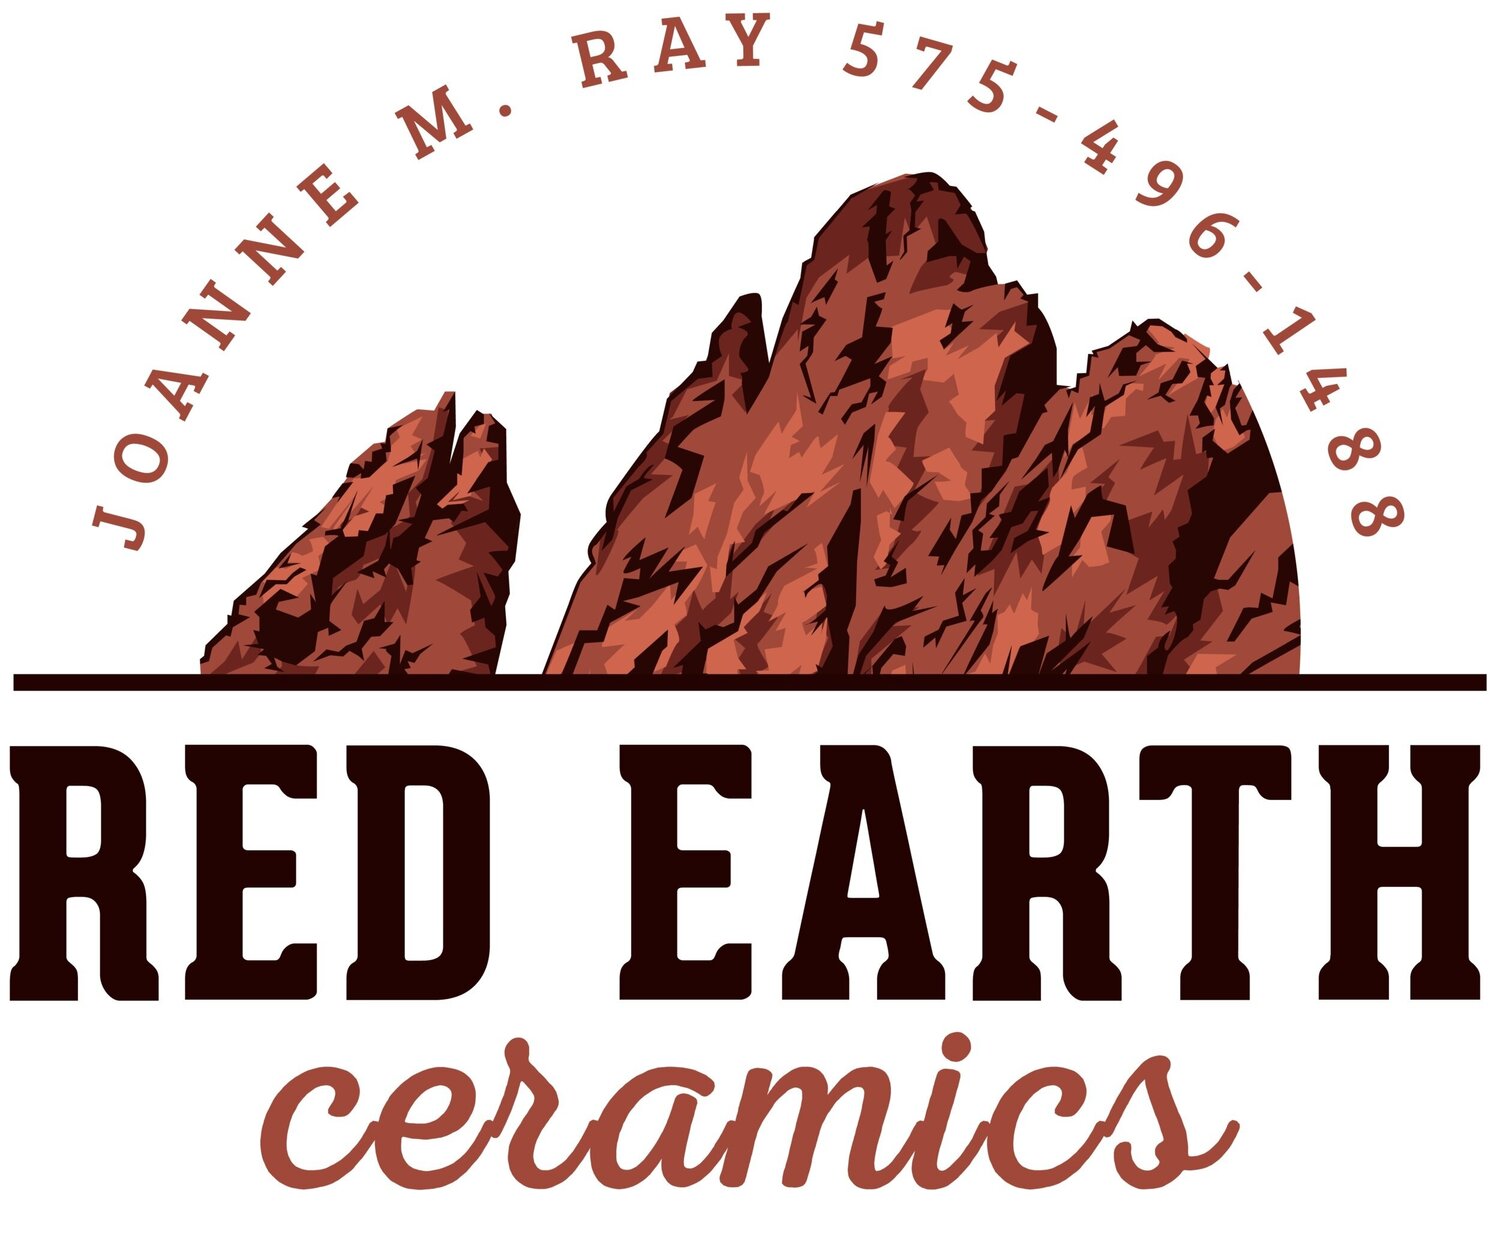 RED EARTH ceramics